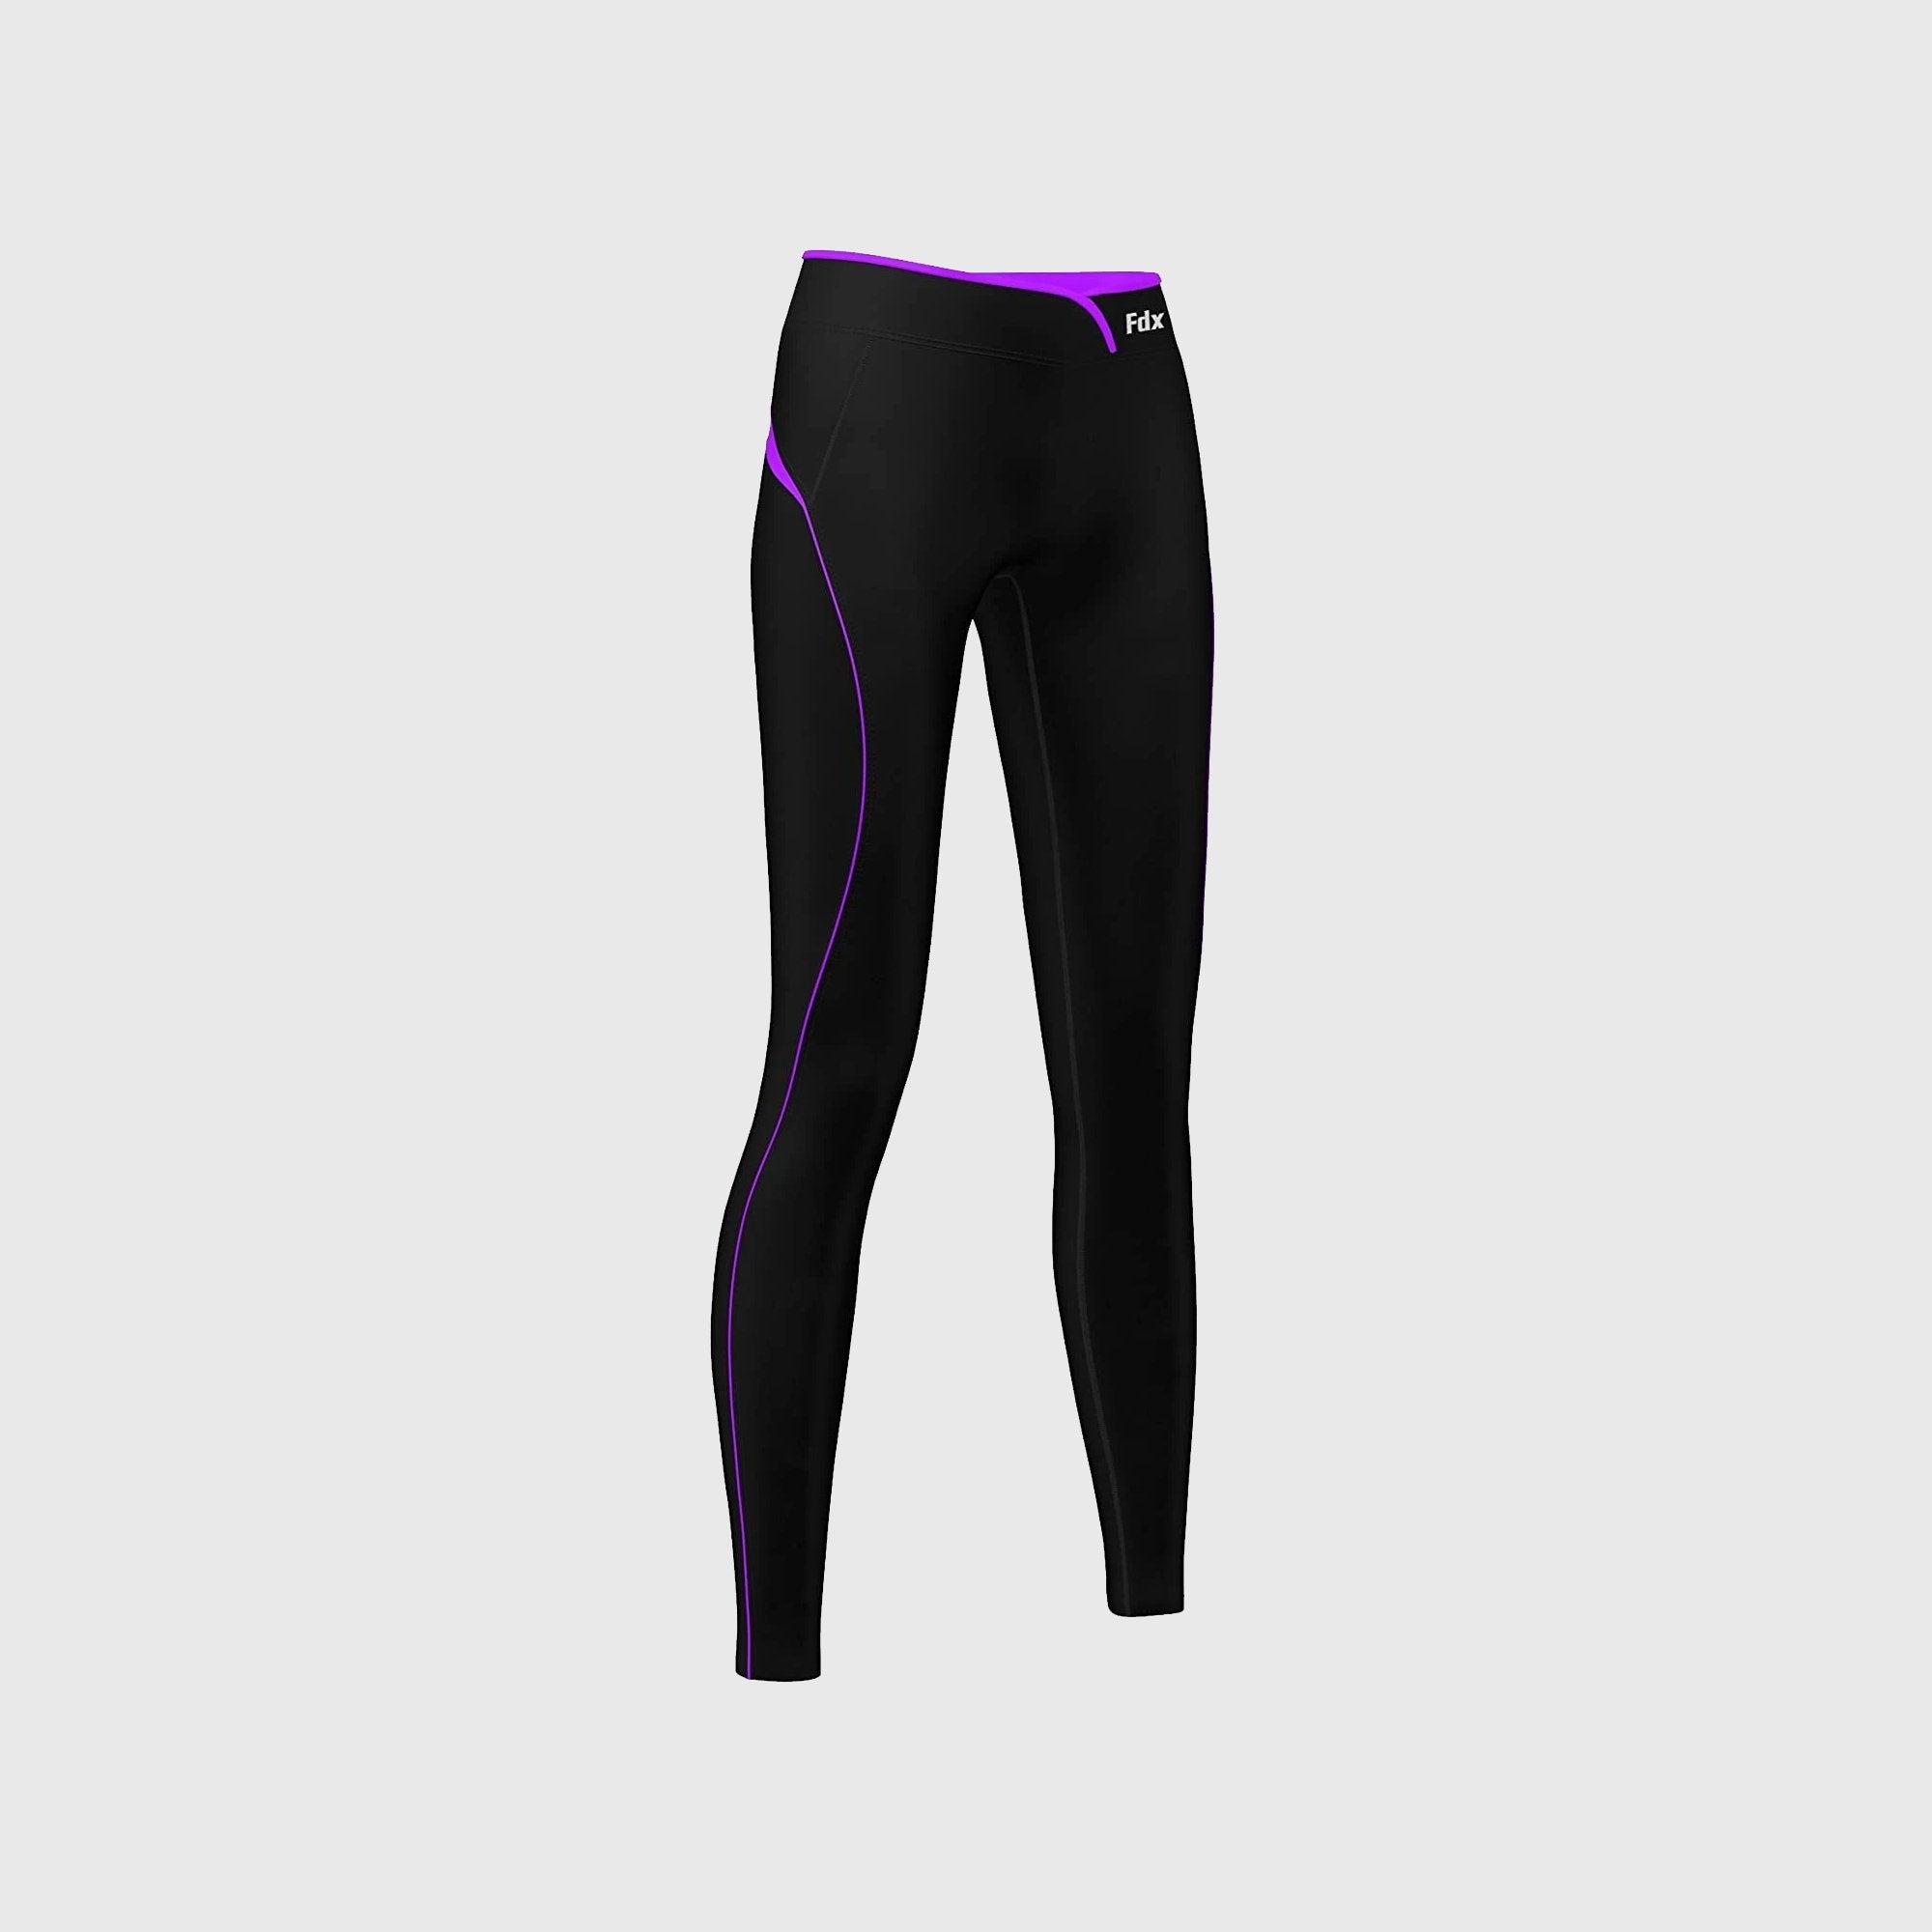 Fdx P2 Purple Women's Thermal Base Layer Winter Compression Leggings